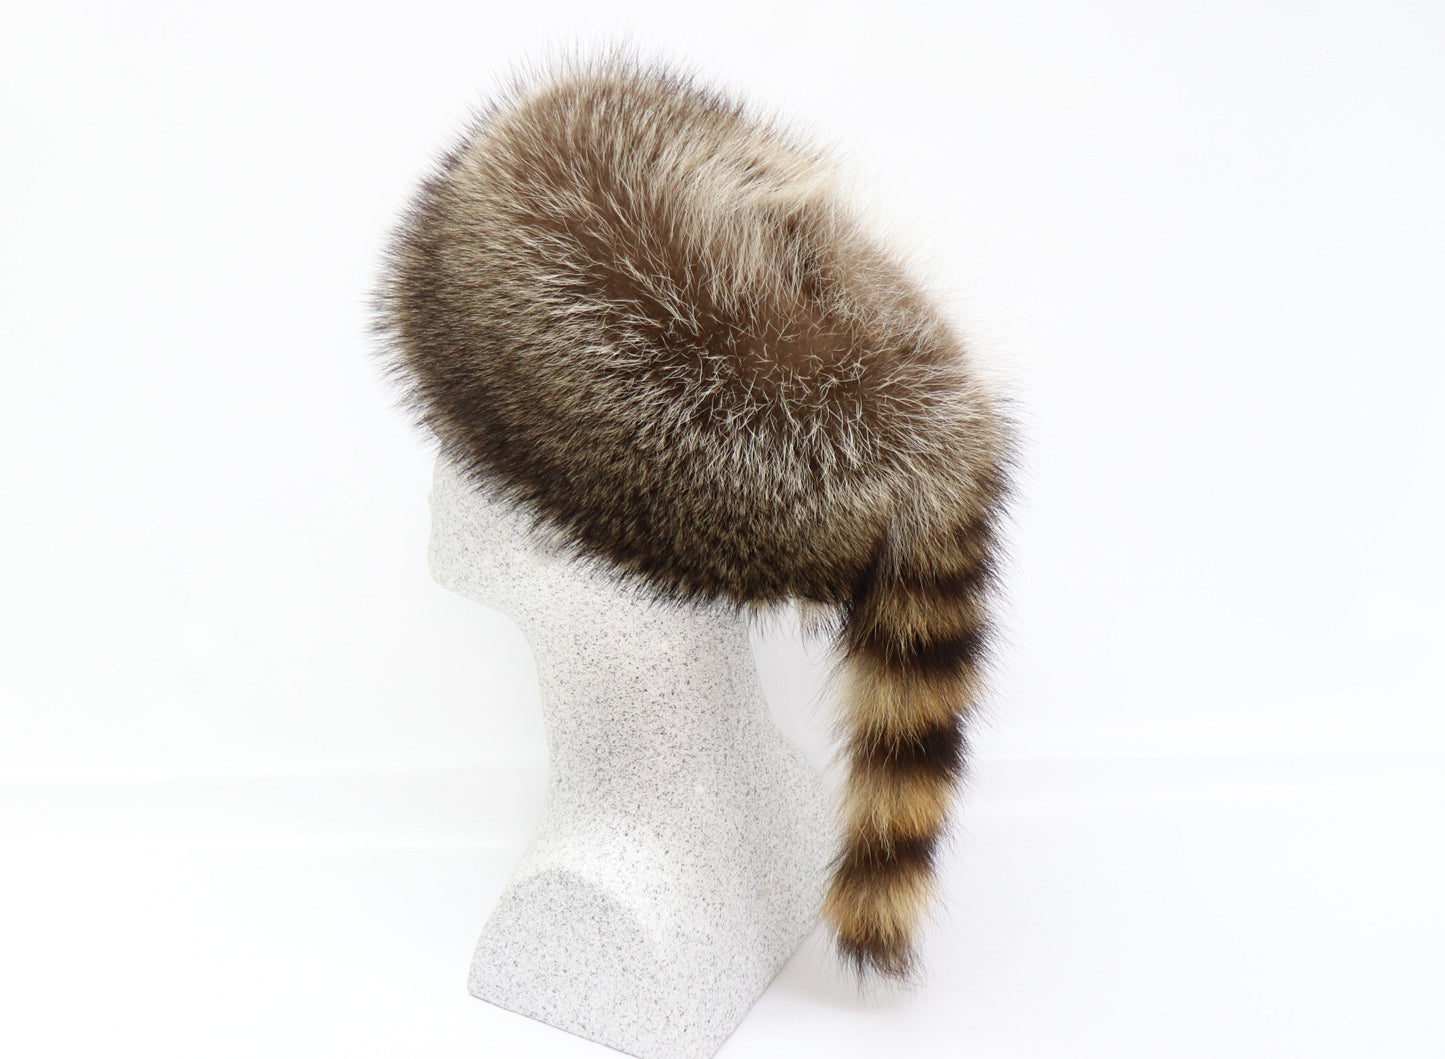 Raccoon hat - trapper hat